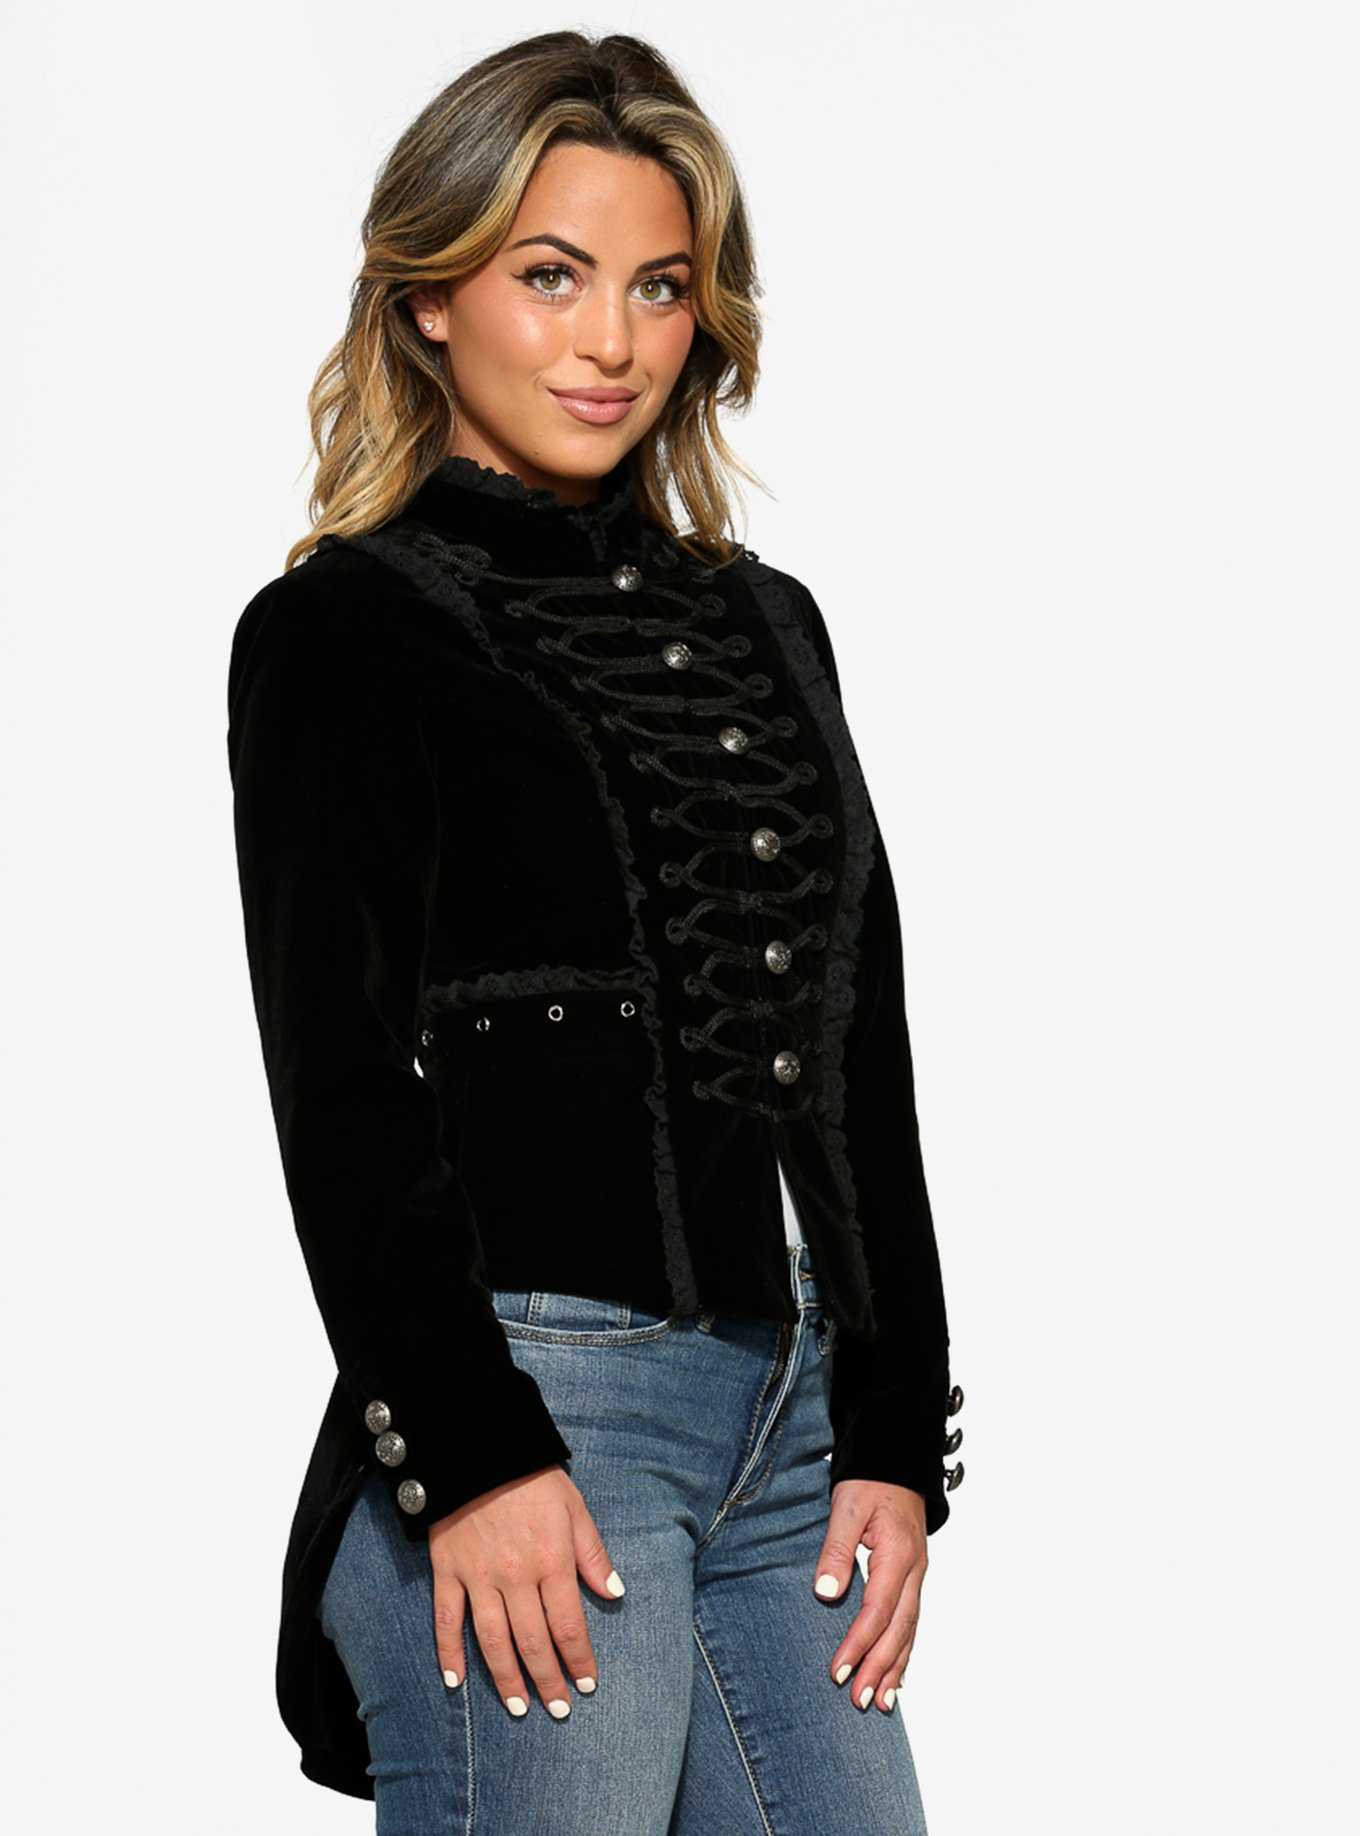 Black Velvet Tailed Jacket, , hi-res